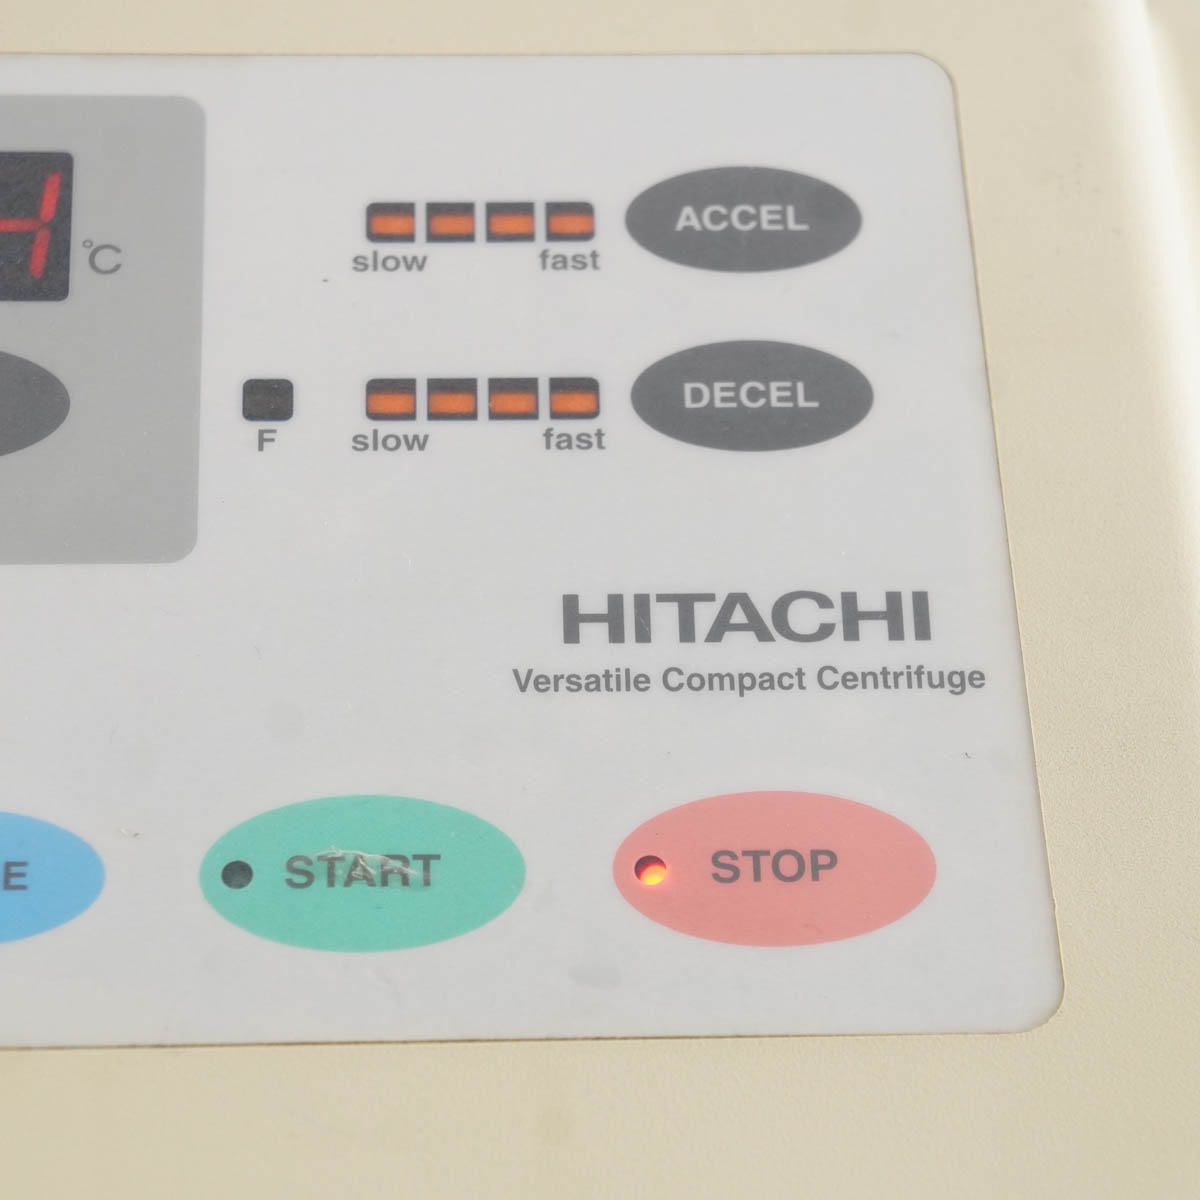 [DW]USED 8日保証 動作確認済 HITACHI CF16RX himac 遠心機 Versatile Compact Centrifuge 多用途小型遠心機 取扱説明書 [ST04227-0028] - 2